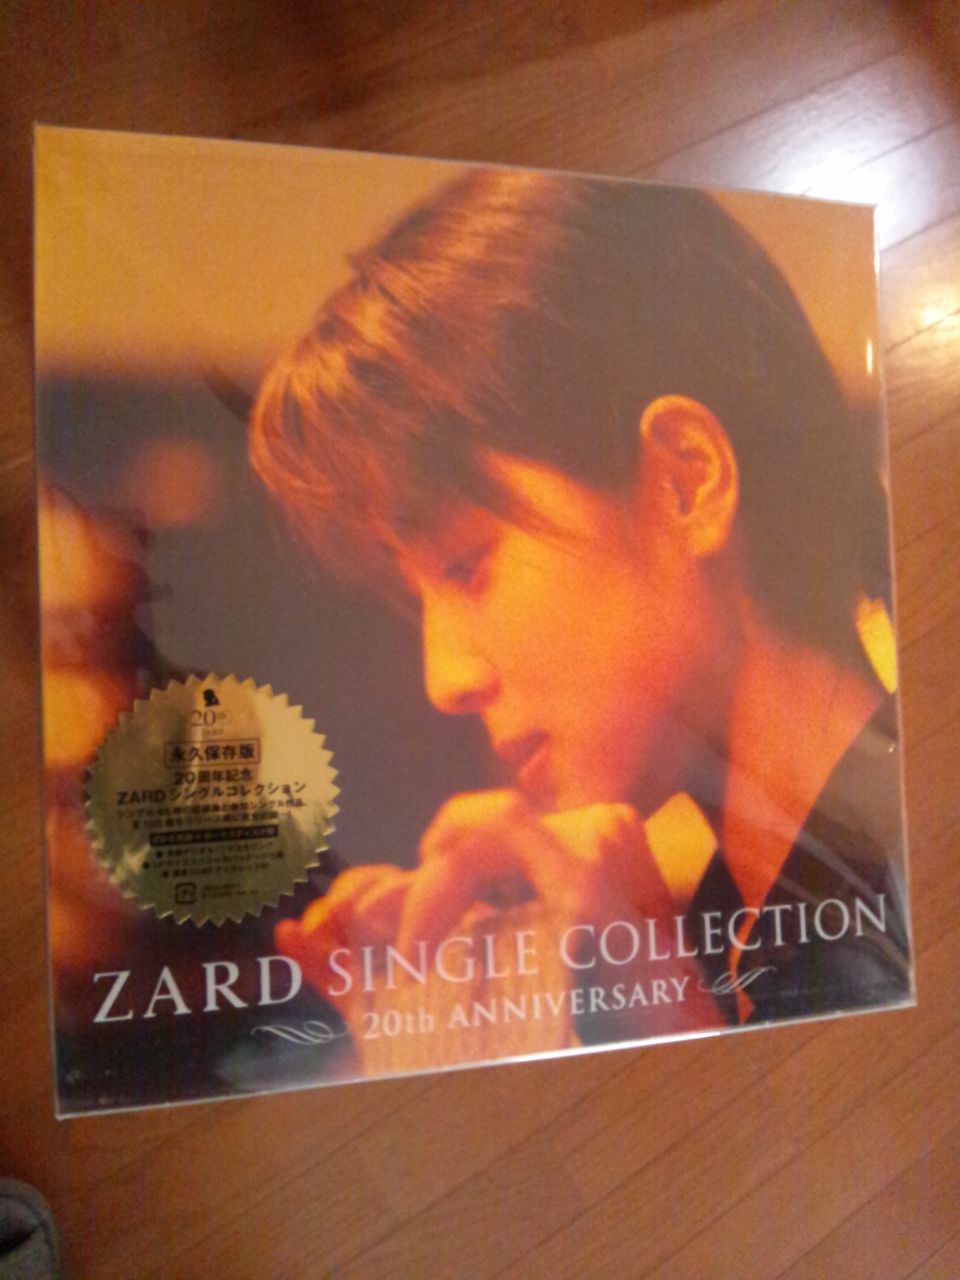 Collection zard 20th mp3 single anniversary Zard Single